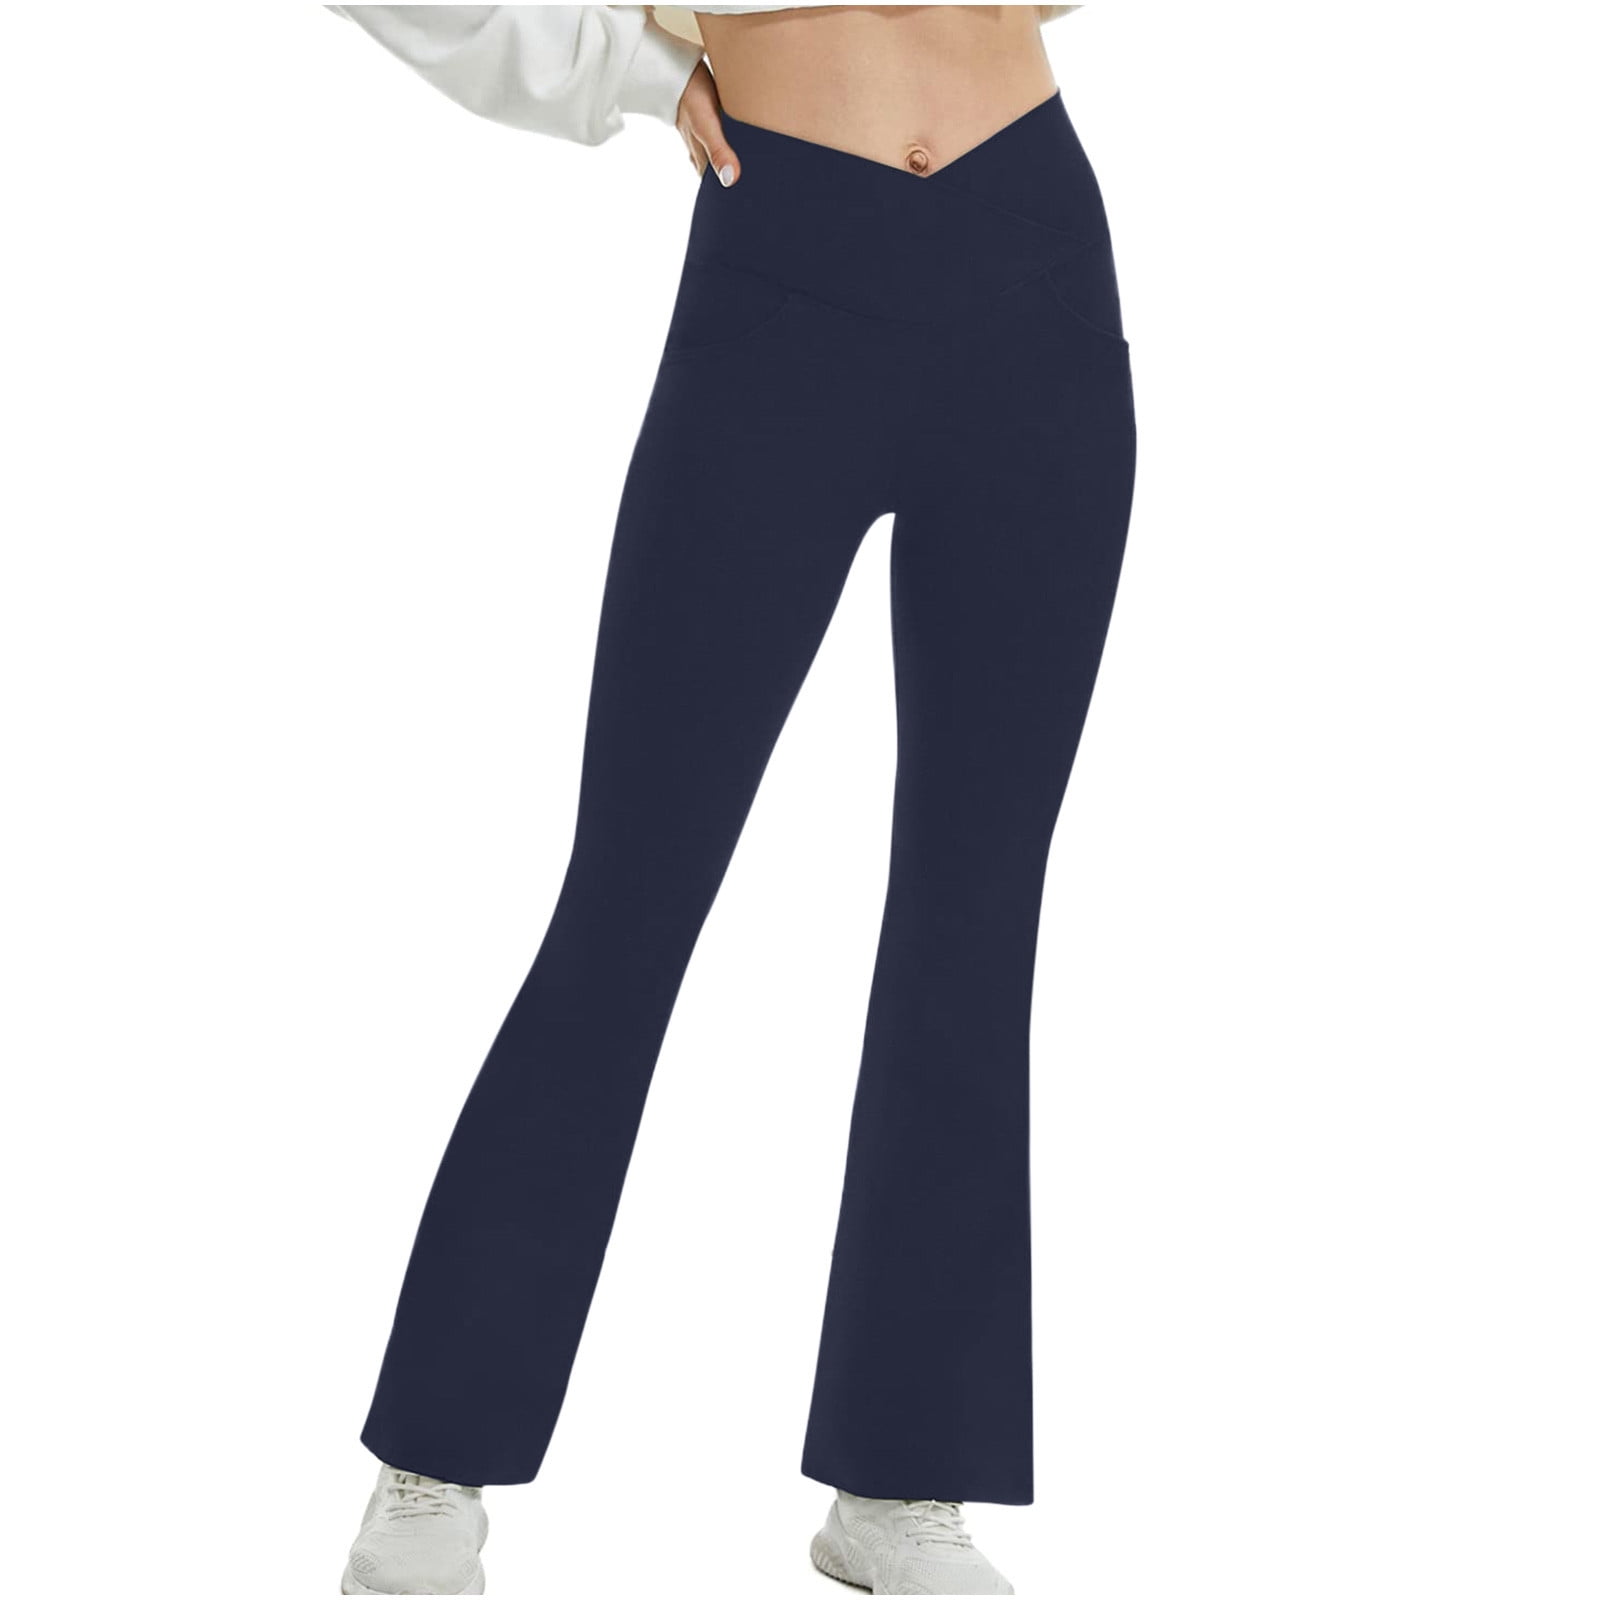  2 Back Pockets,Womens Bootcut Yoga Pants Flare Workout Pants,31,Navy,Size  XL